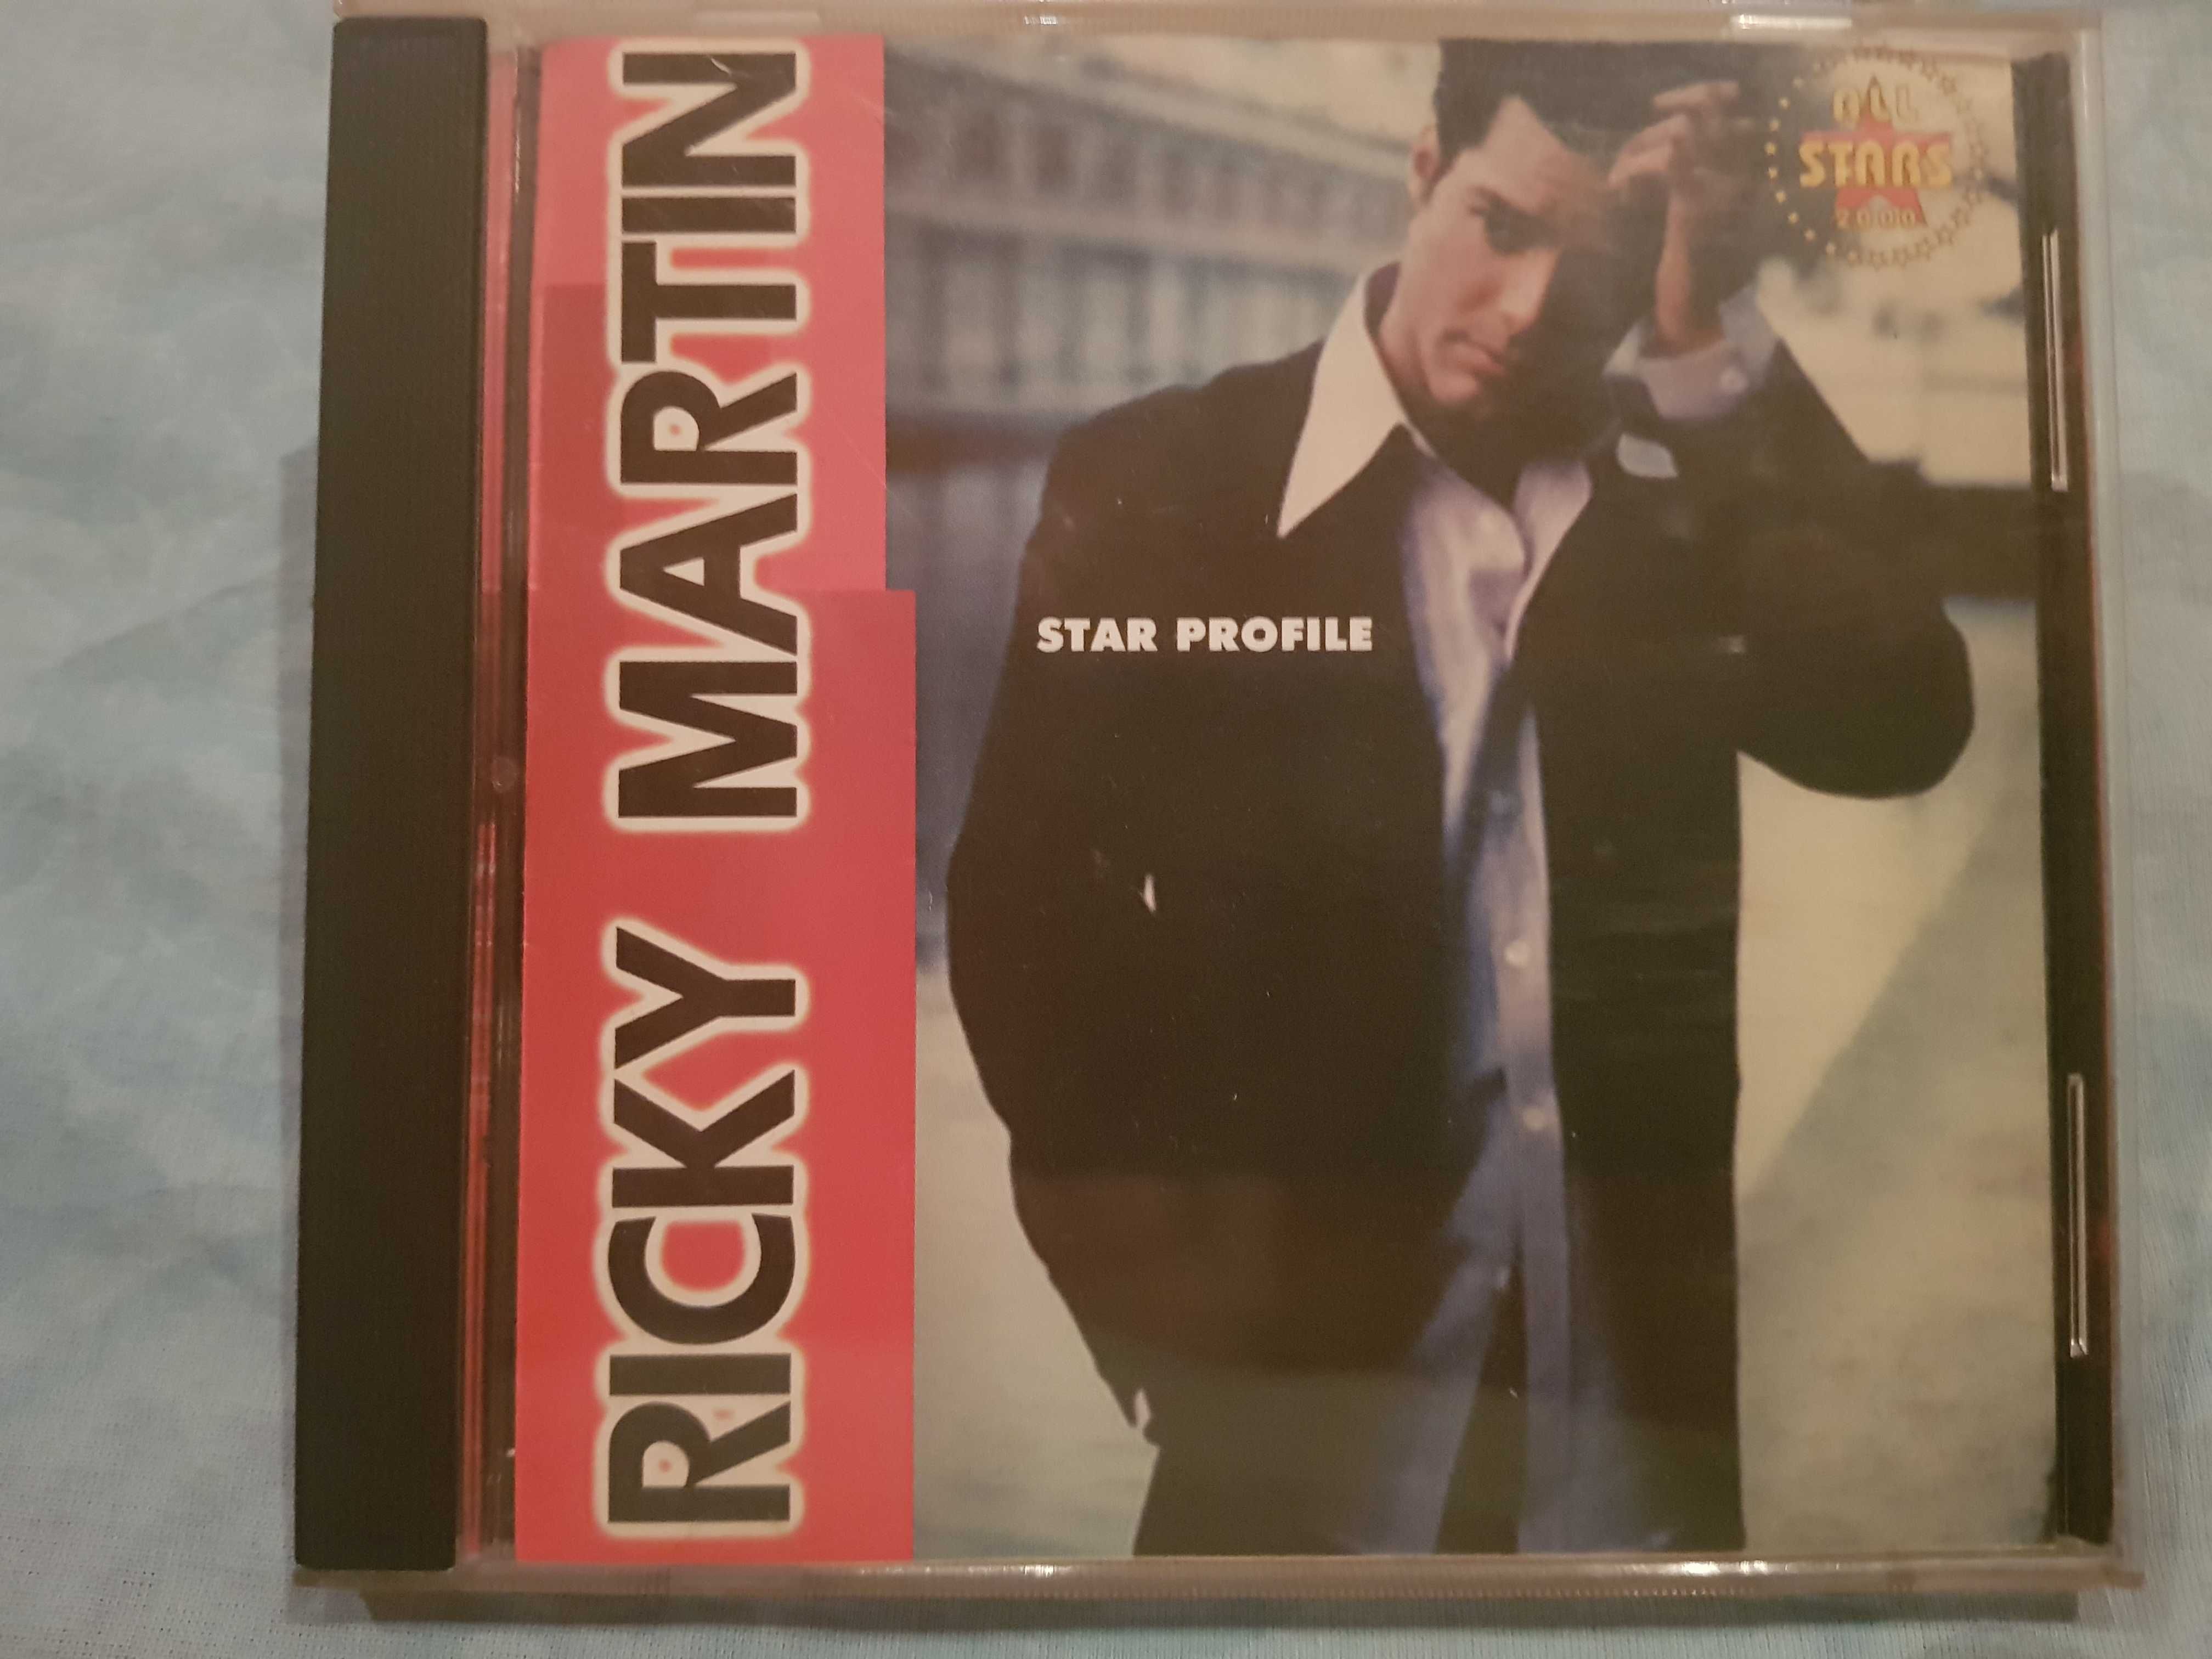 CD audio Latino dance si Ricky Martin si altele